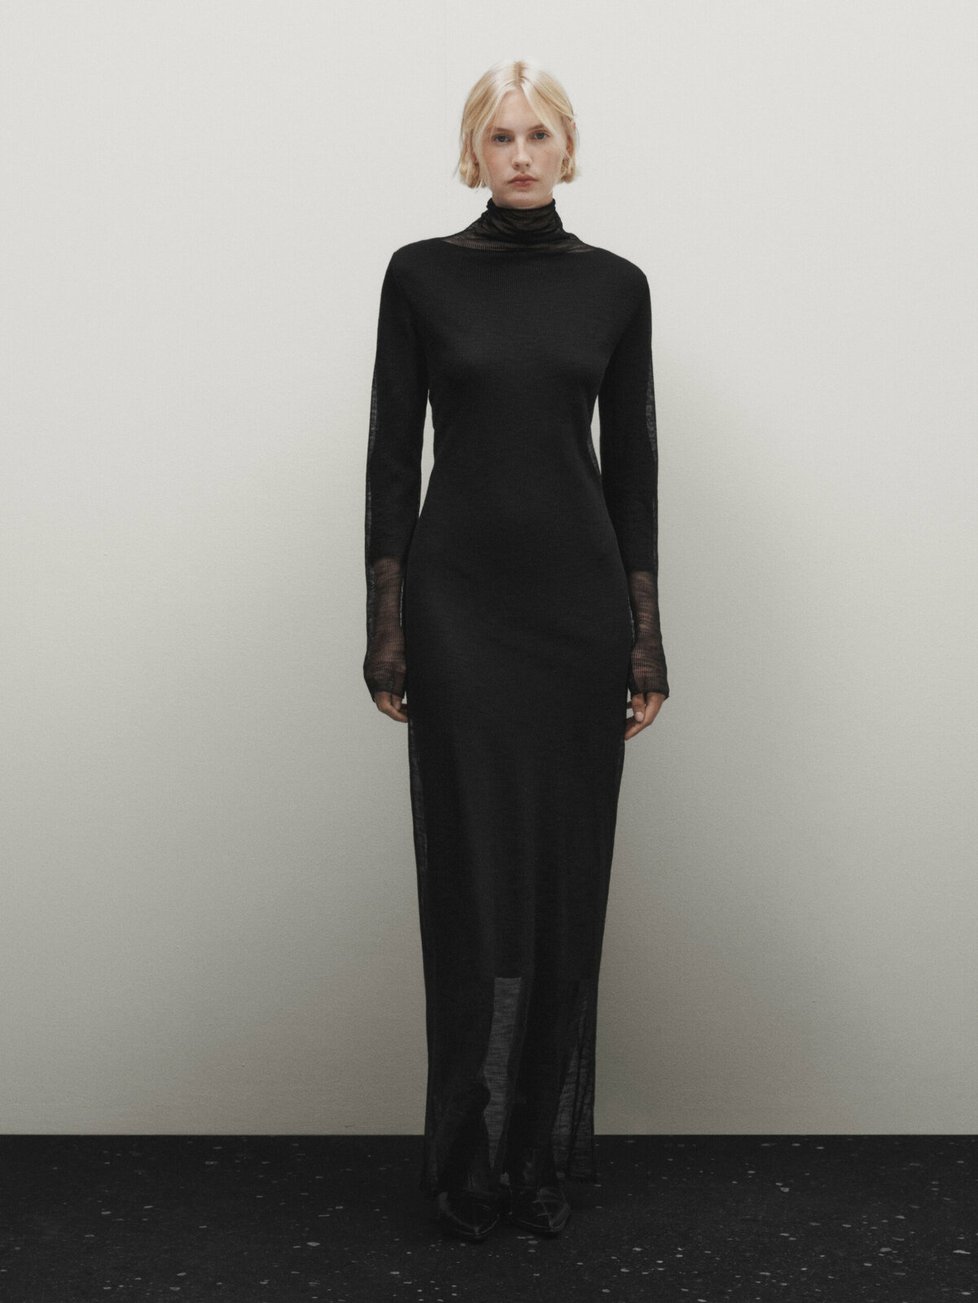 šaty Massimo Dutti, 3995 Kč